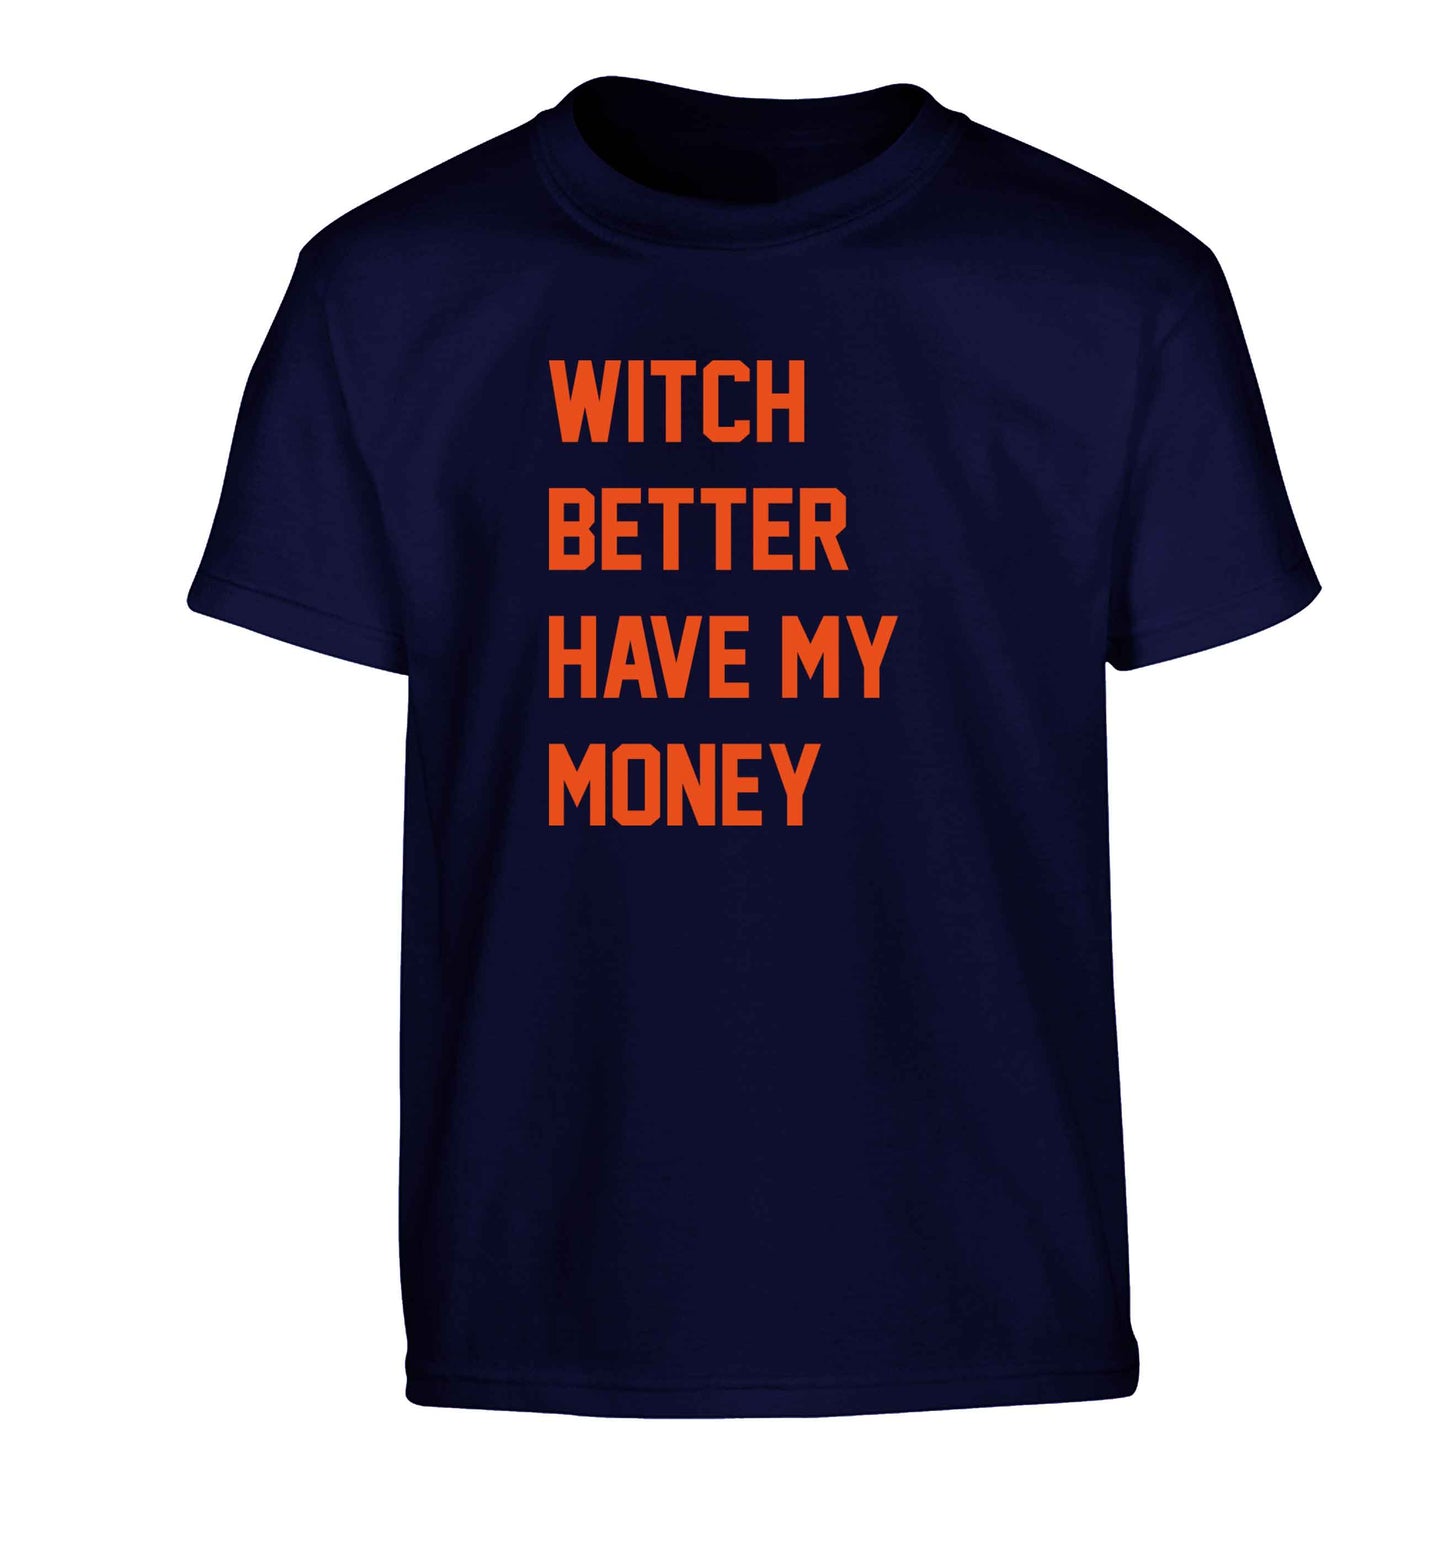 Witch better have my money Children's navy Tshirt 12-13 Years